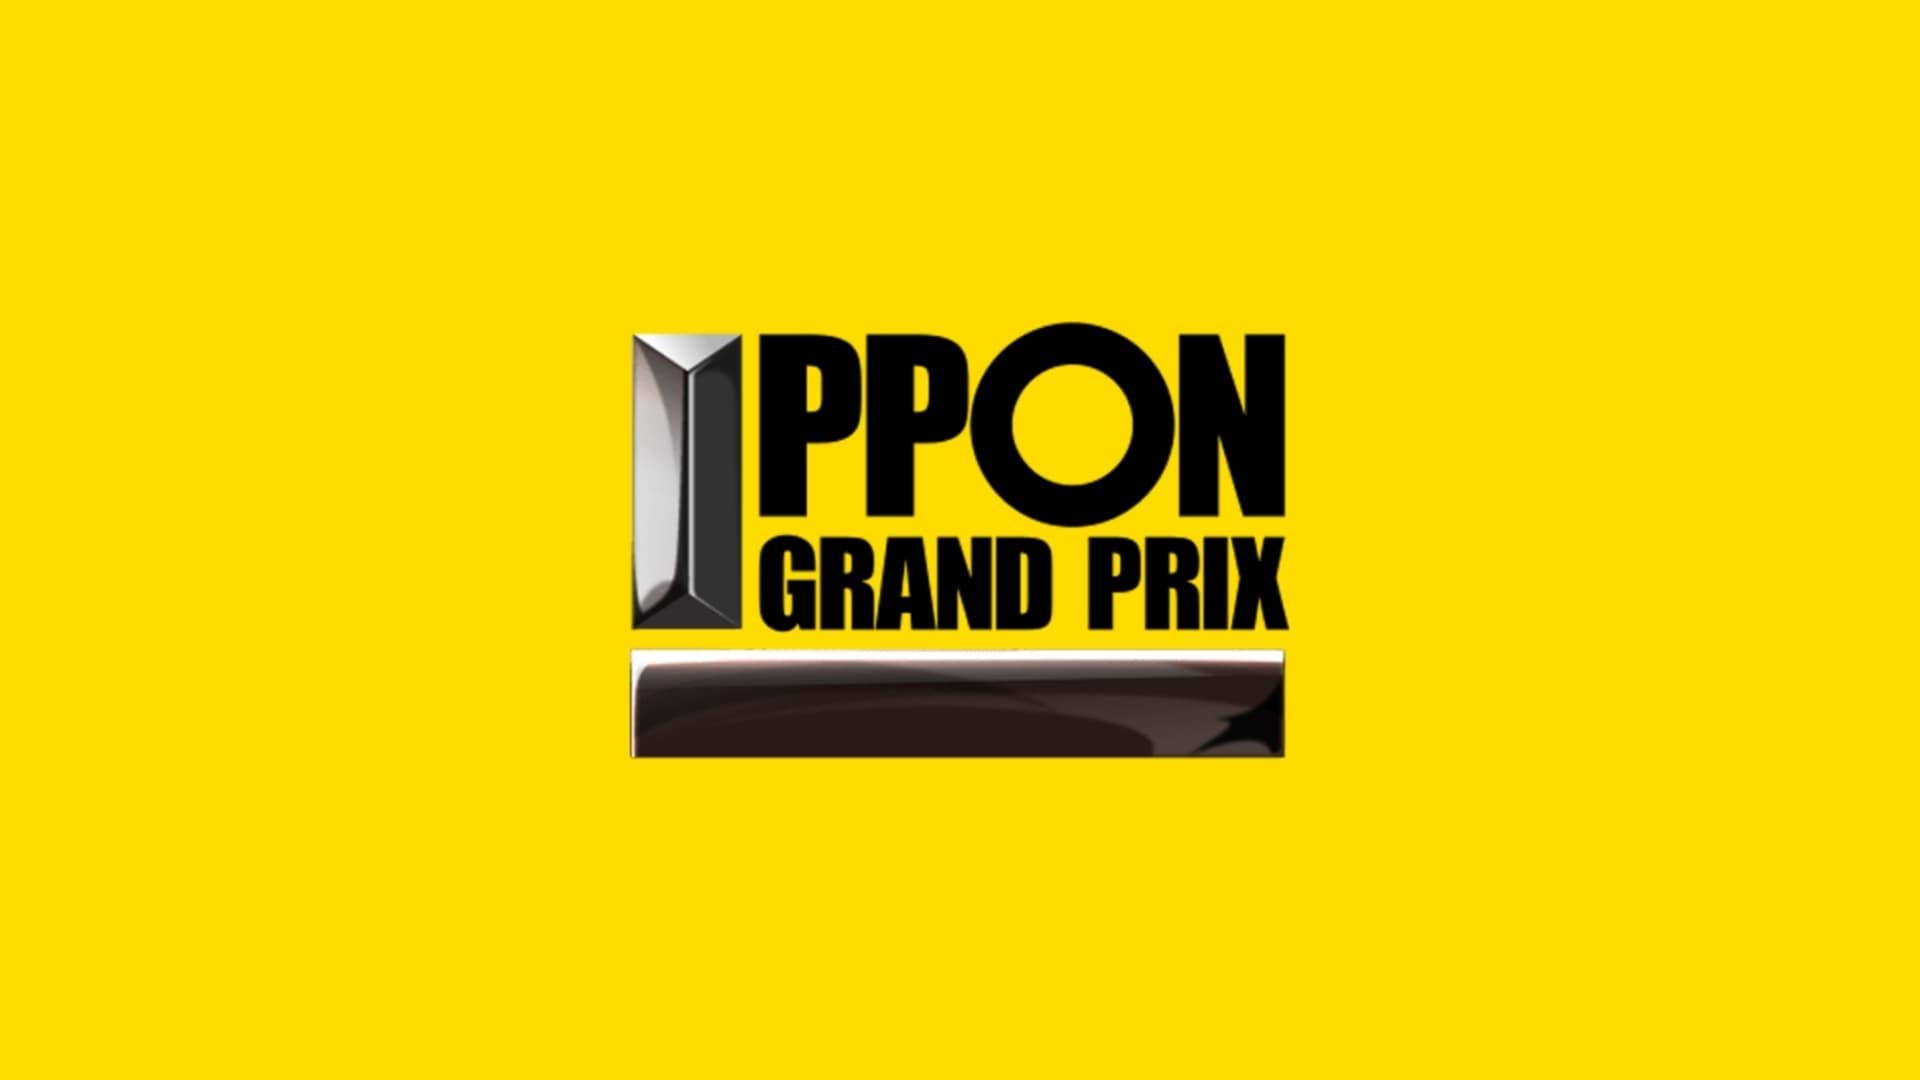 IPPON GRAND PRIX backdrop